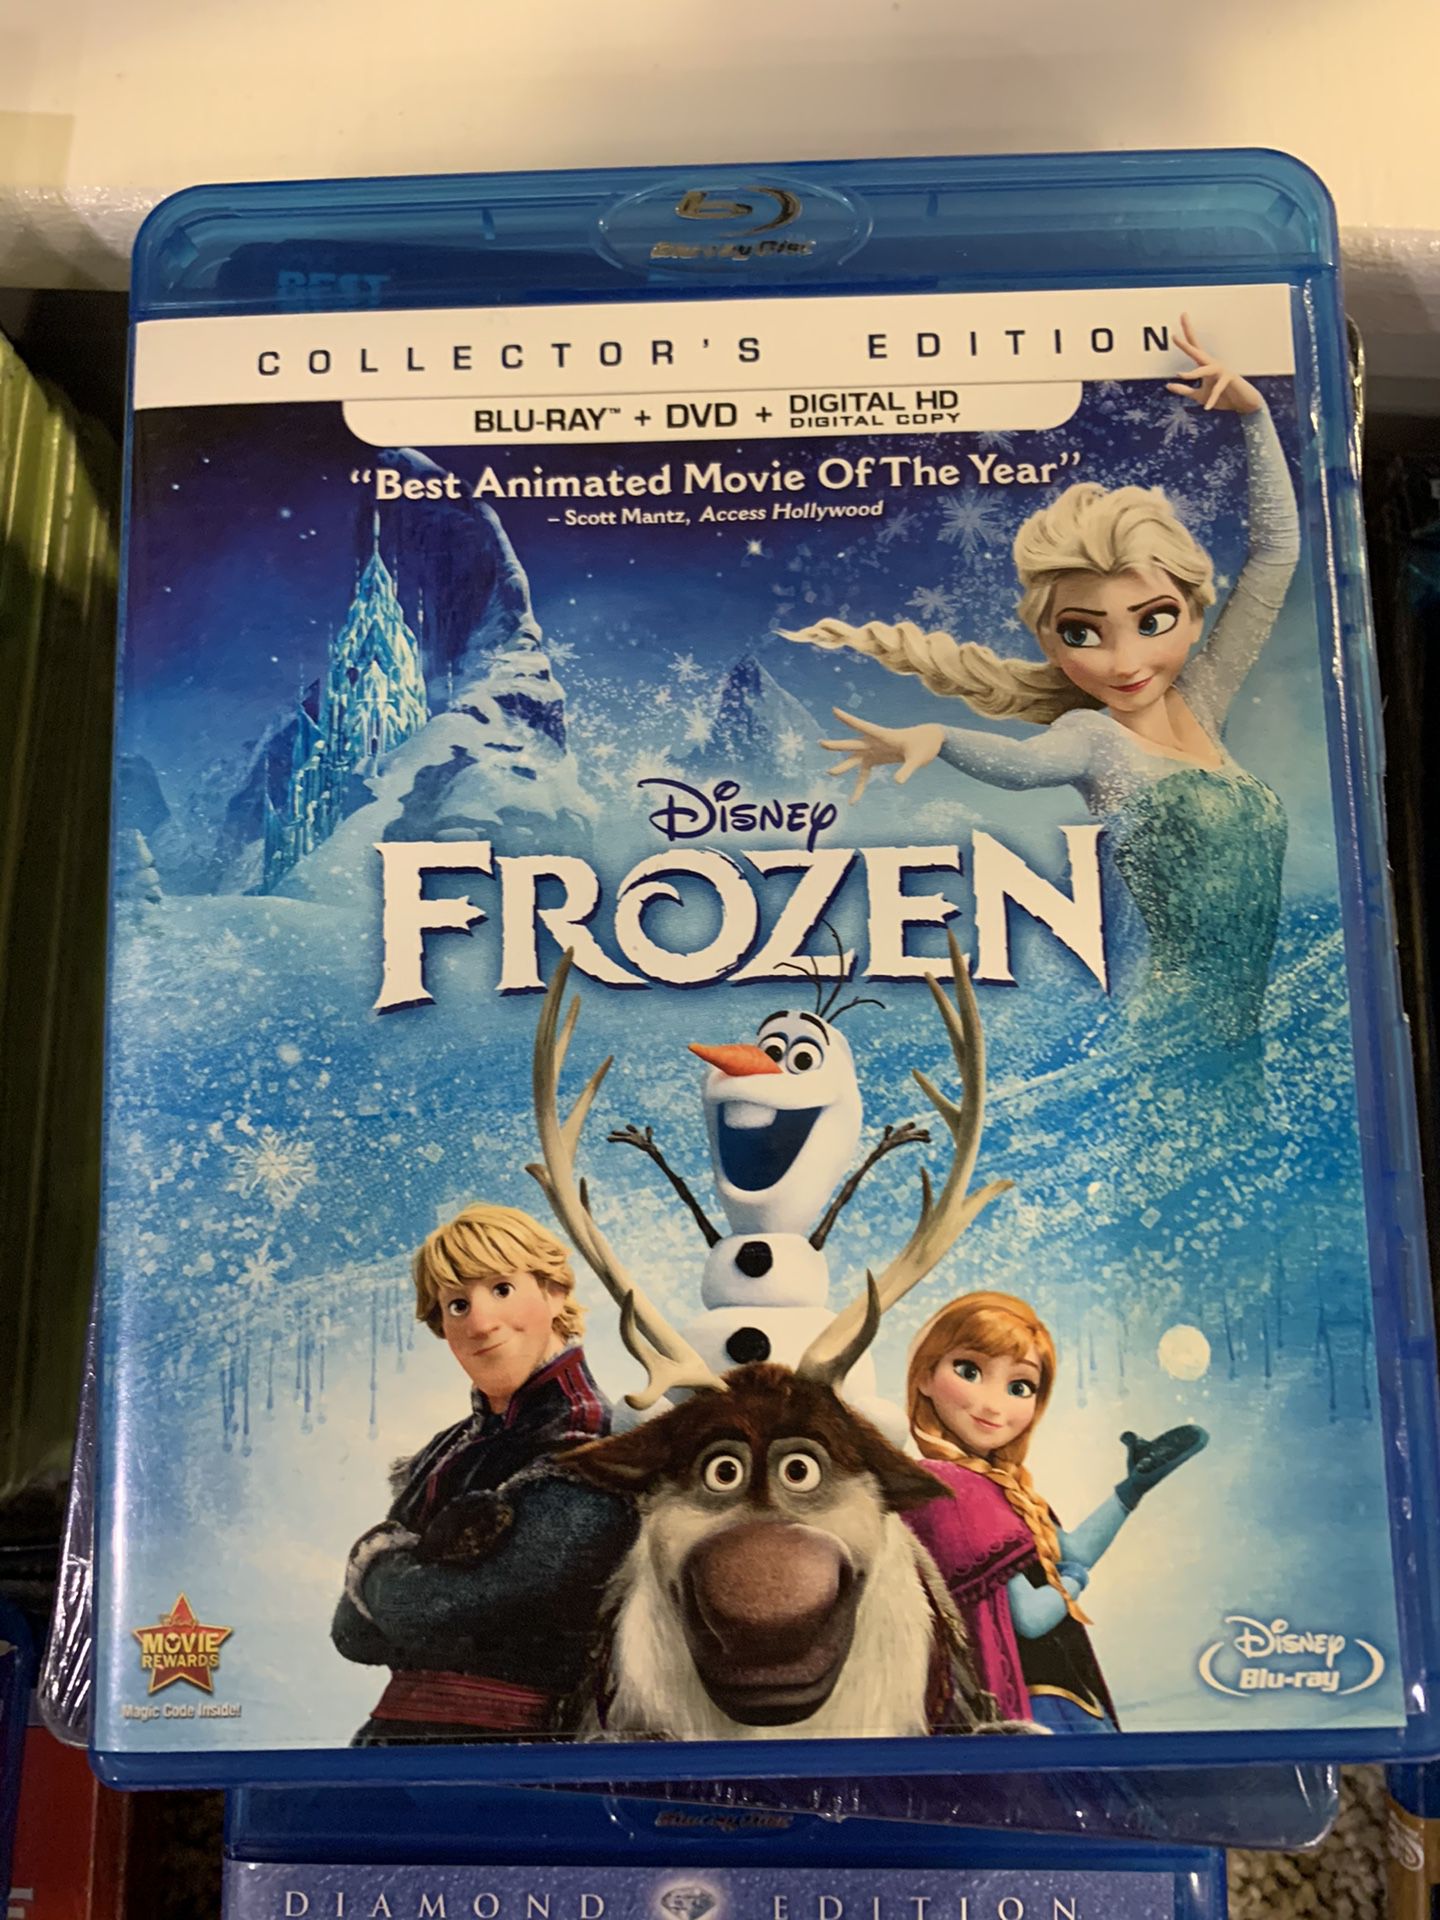 Disney Blu-Ray + DVD Combo Packs (no digital code)